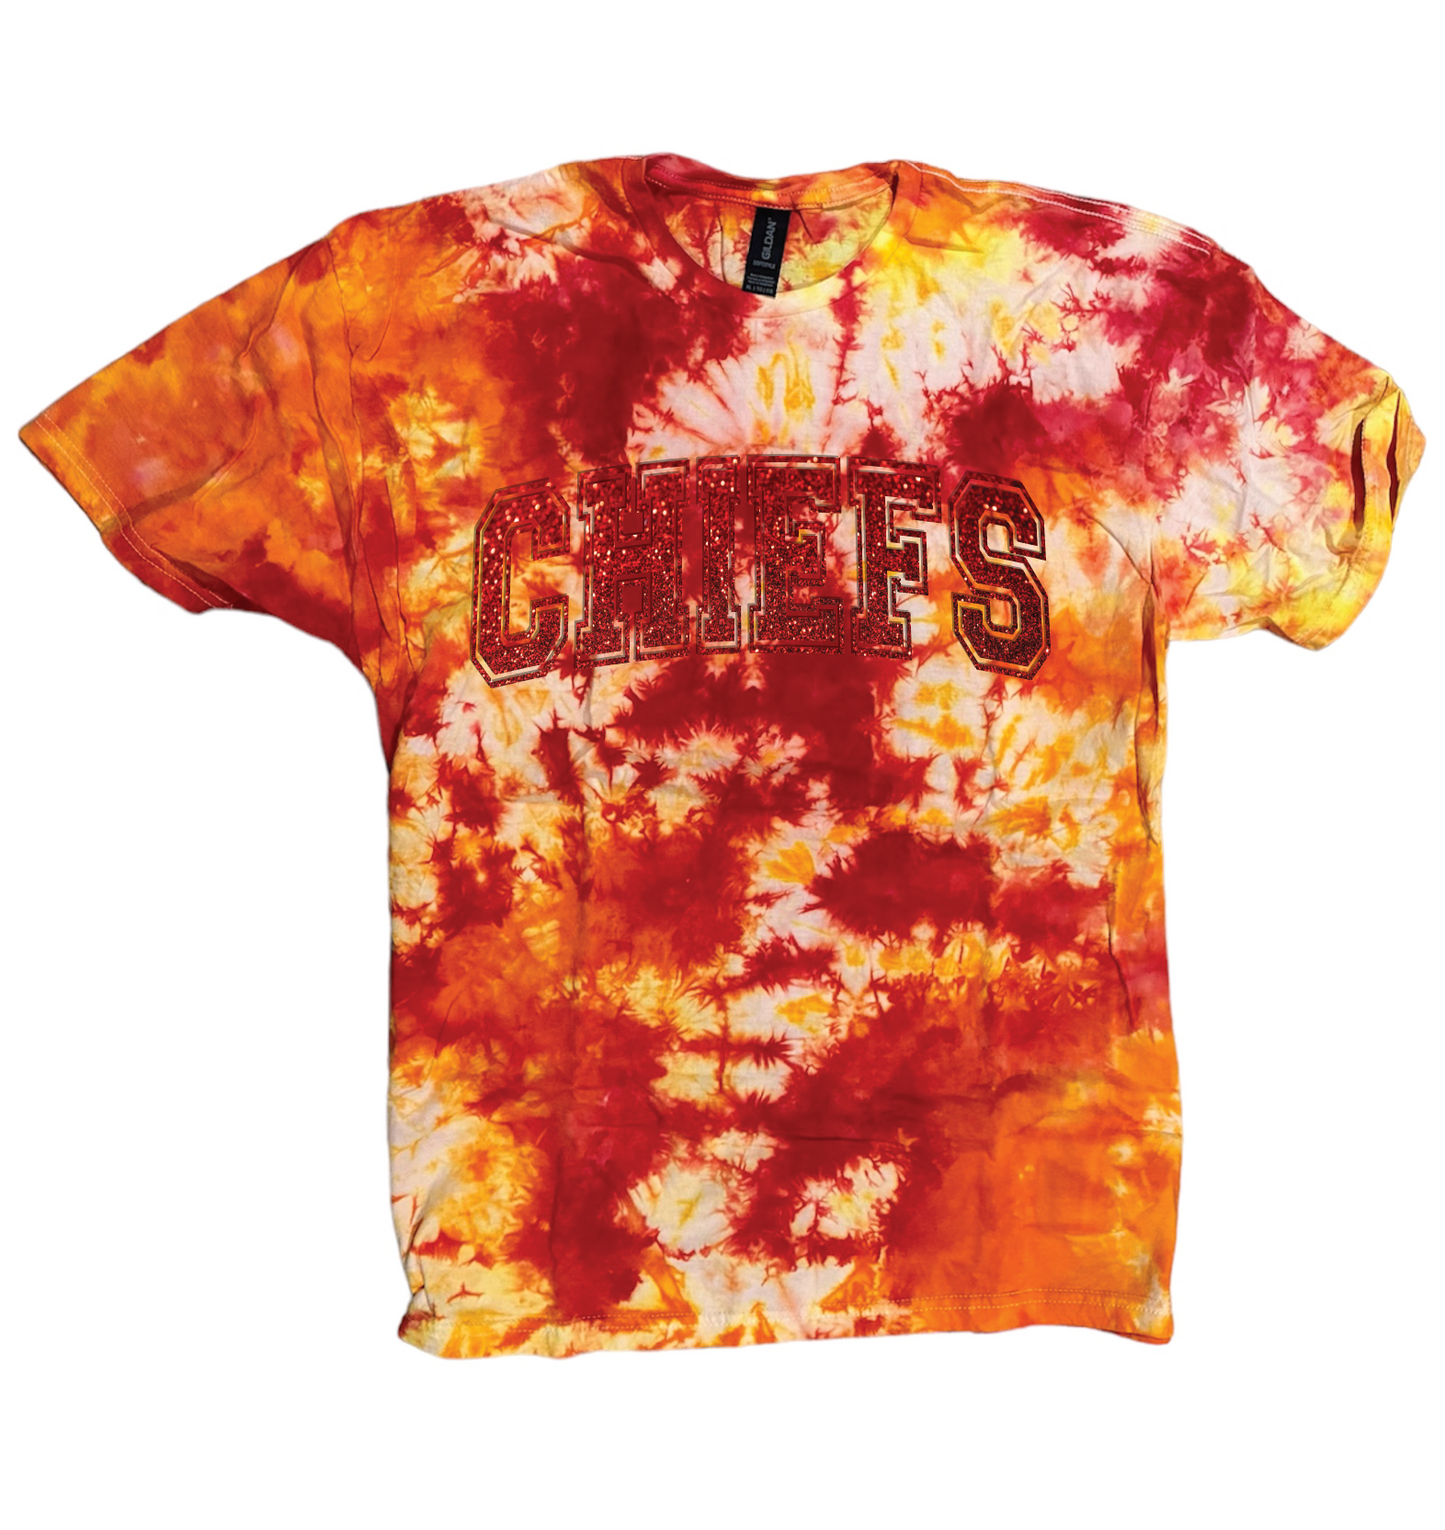 Chiefs Tie Dye T-Shirt